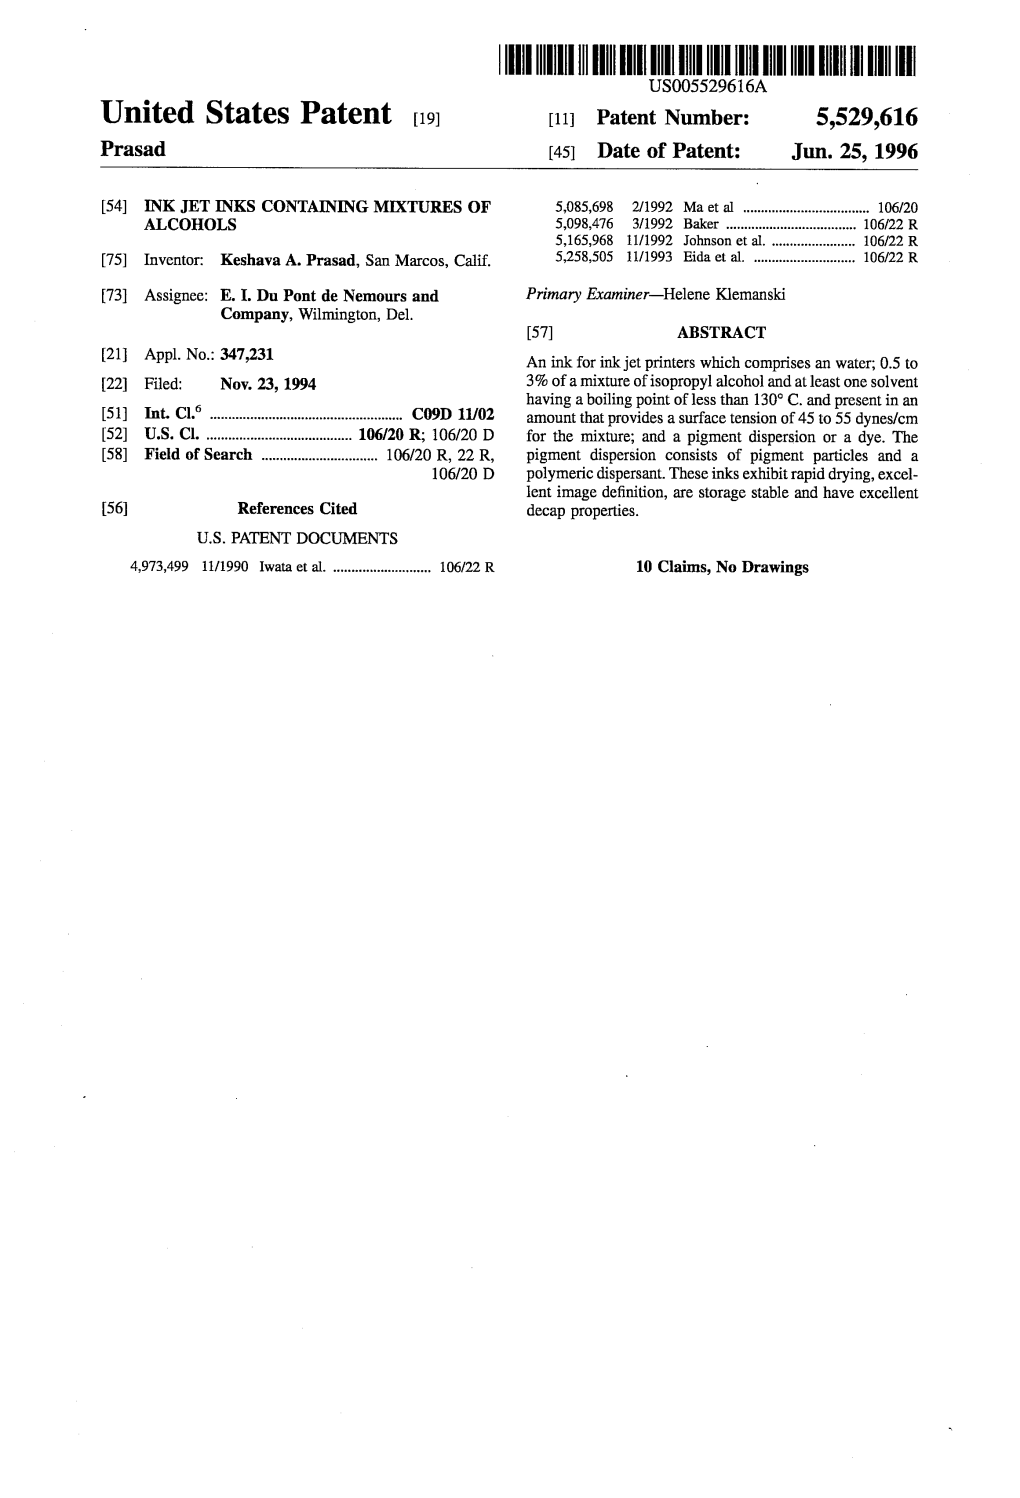 |||||||IIII US00552961.6A United States Patent 19) 11 Patent Number: 5,529,616 Prasad (45) Date of Patent: Jun